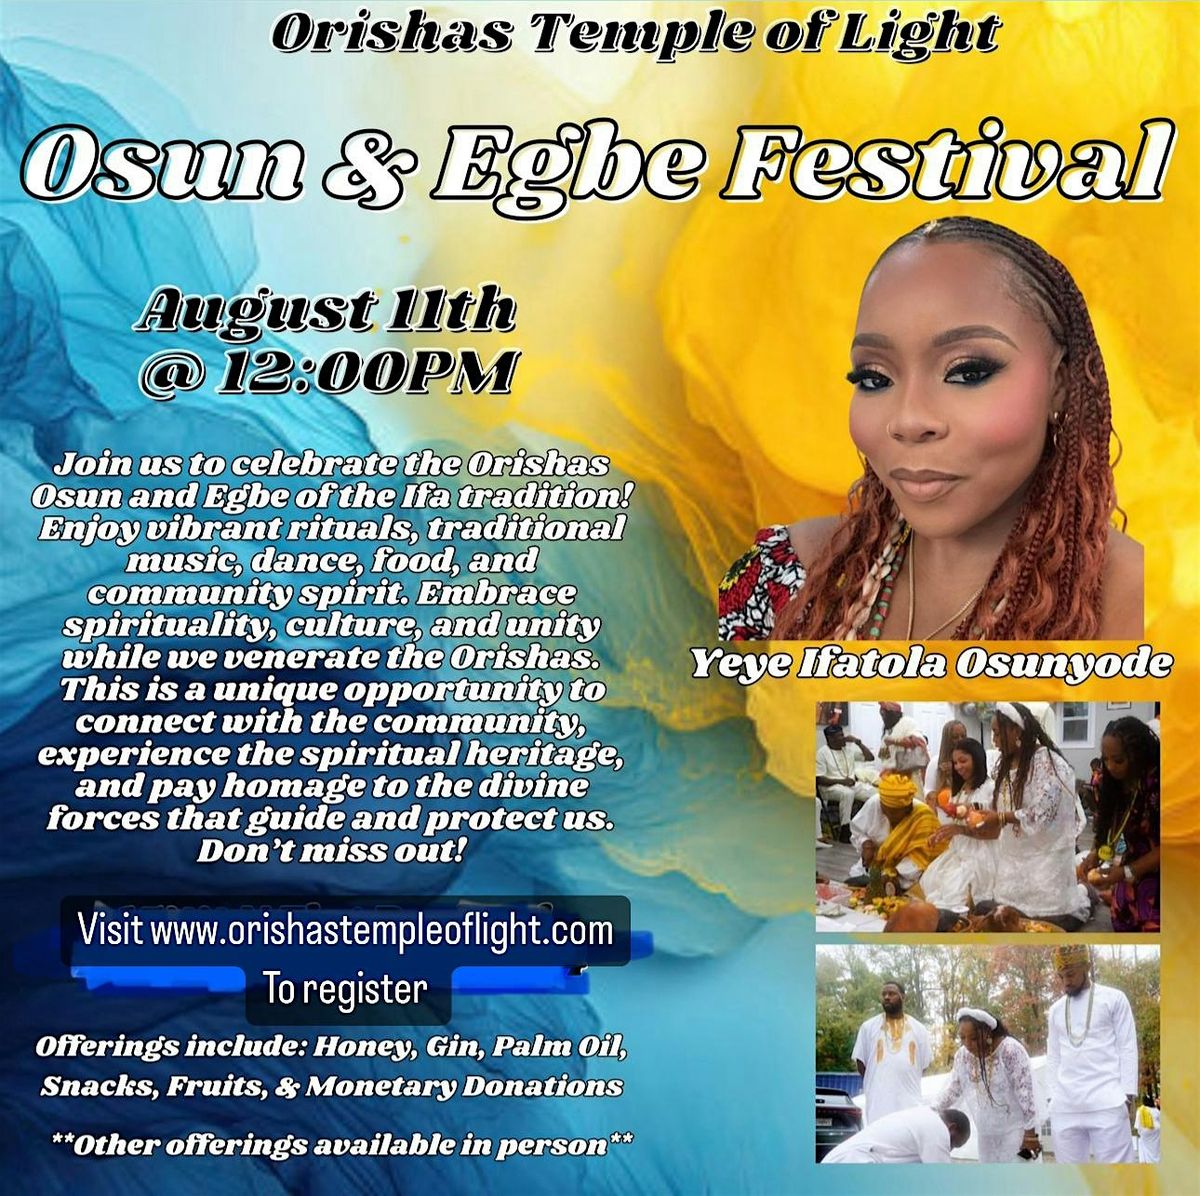 Orishas Temple of Light Presents: Osun & Egbe Festival